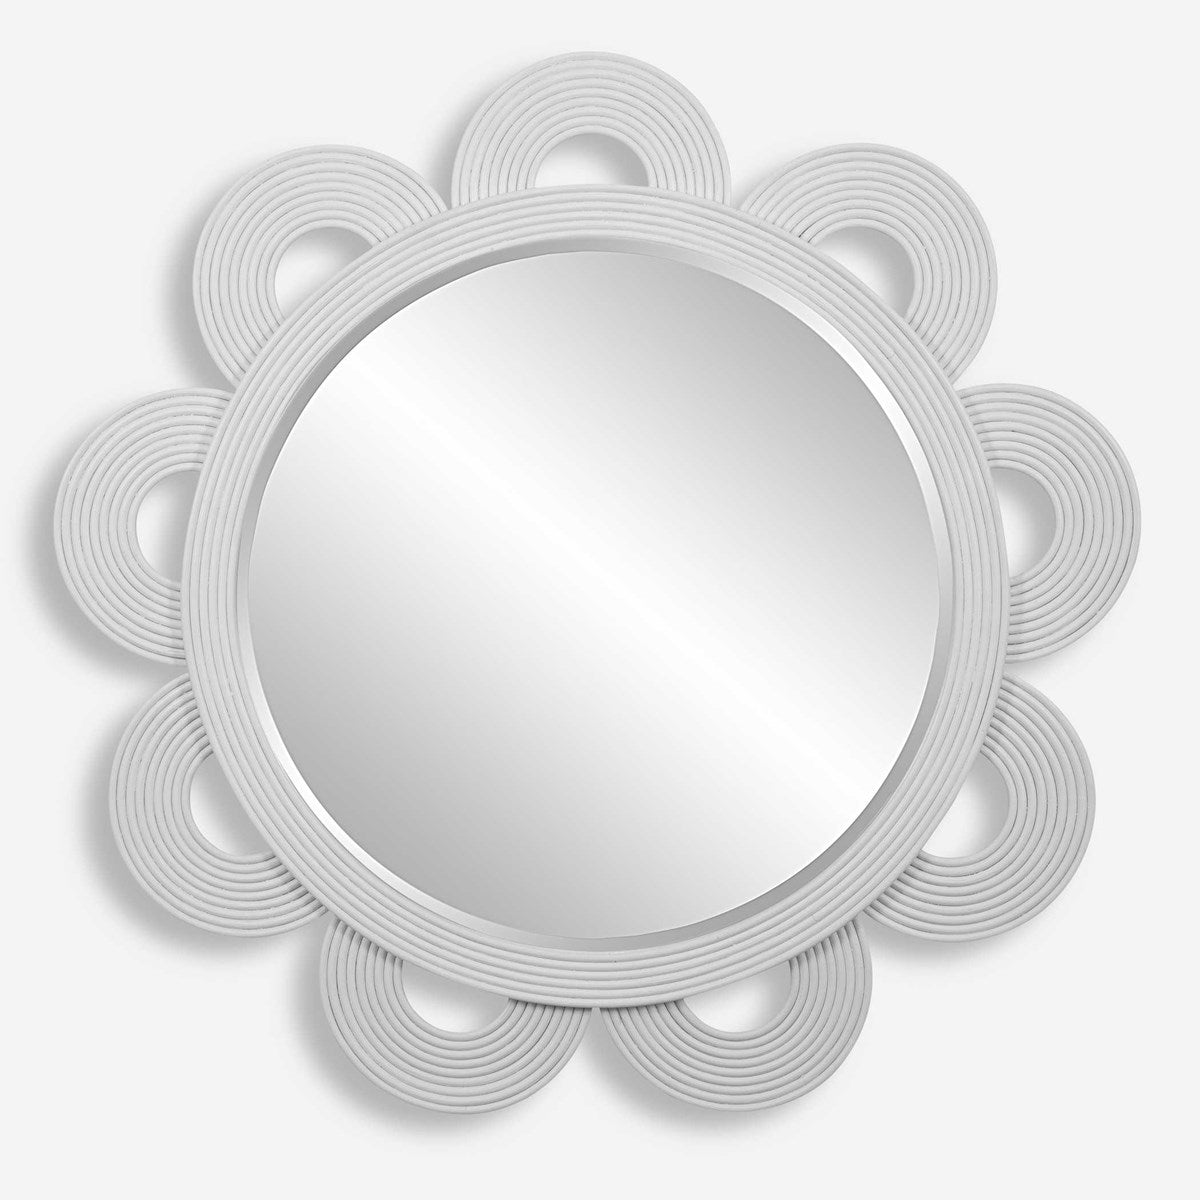 Uttermost Clematis White Rattan Round Mirror-Uttermost-UTTM-08177-Mirrors-2-France and Son